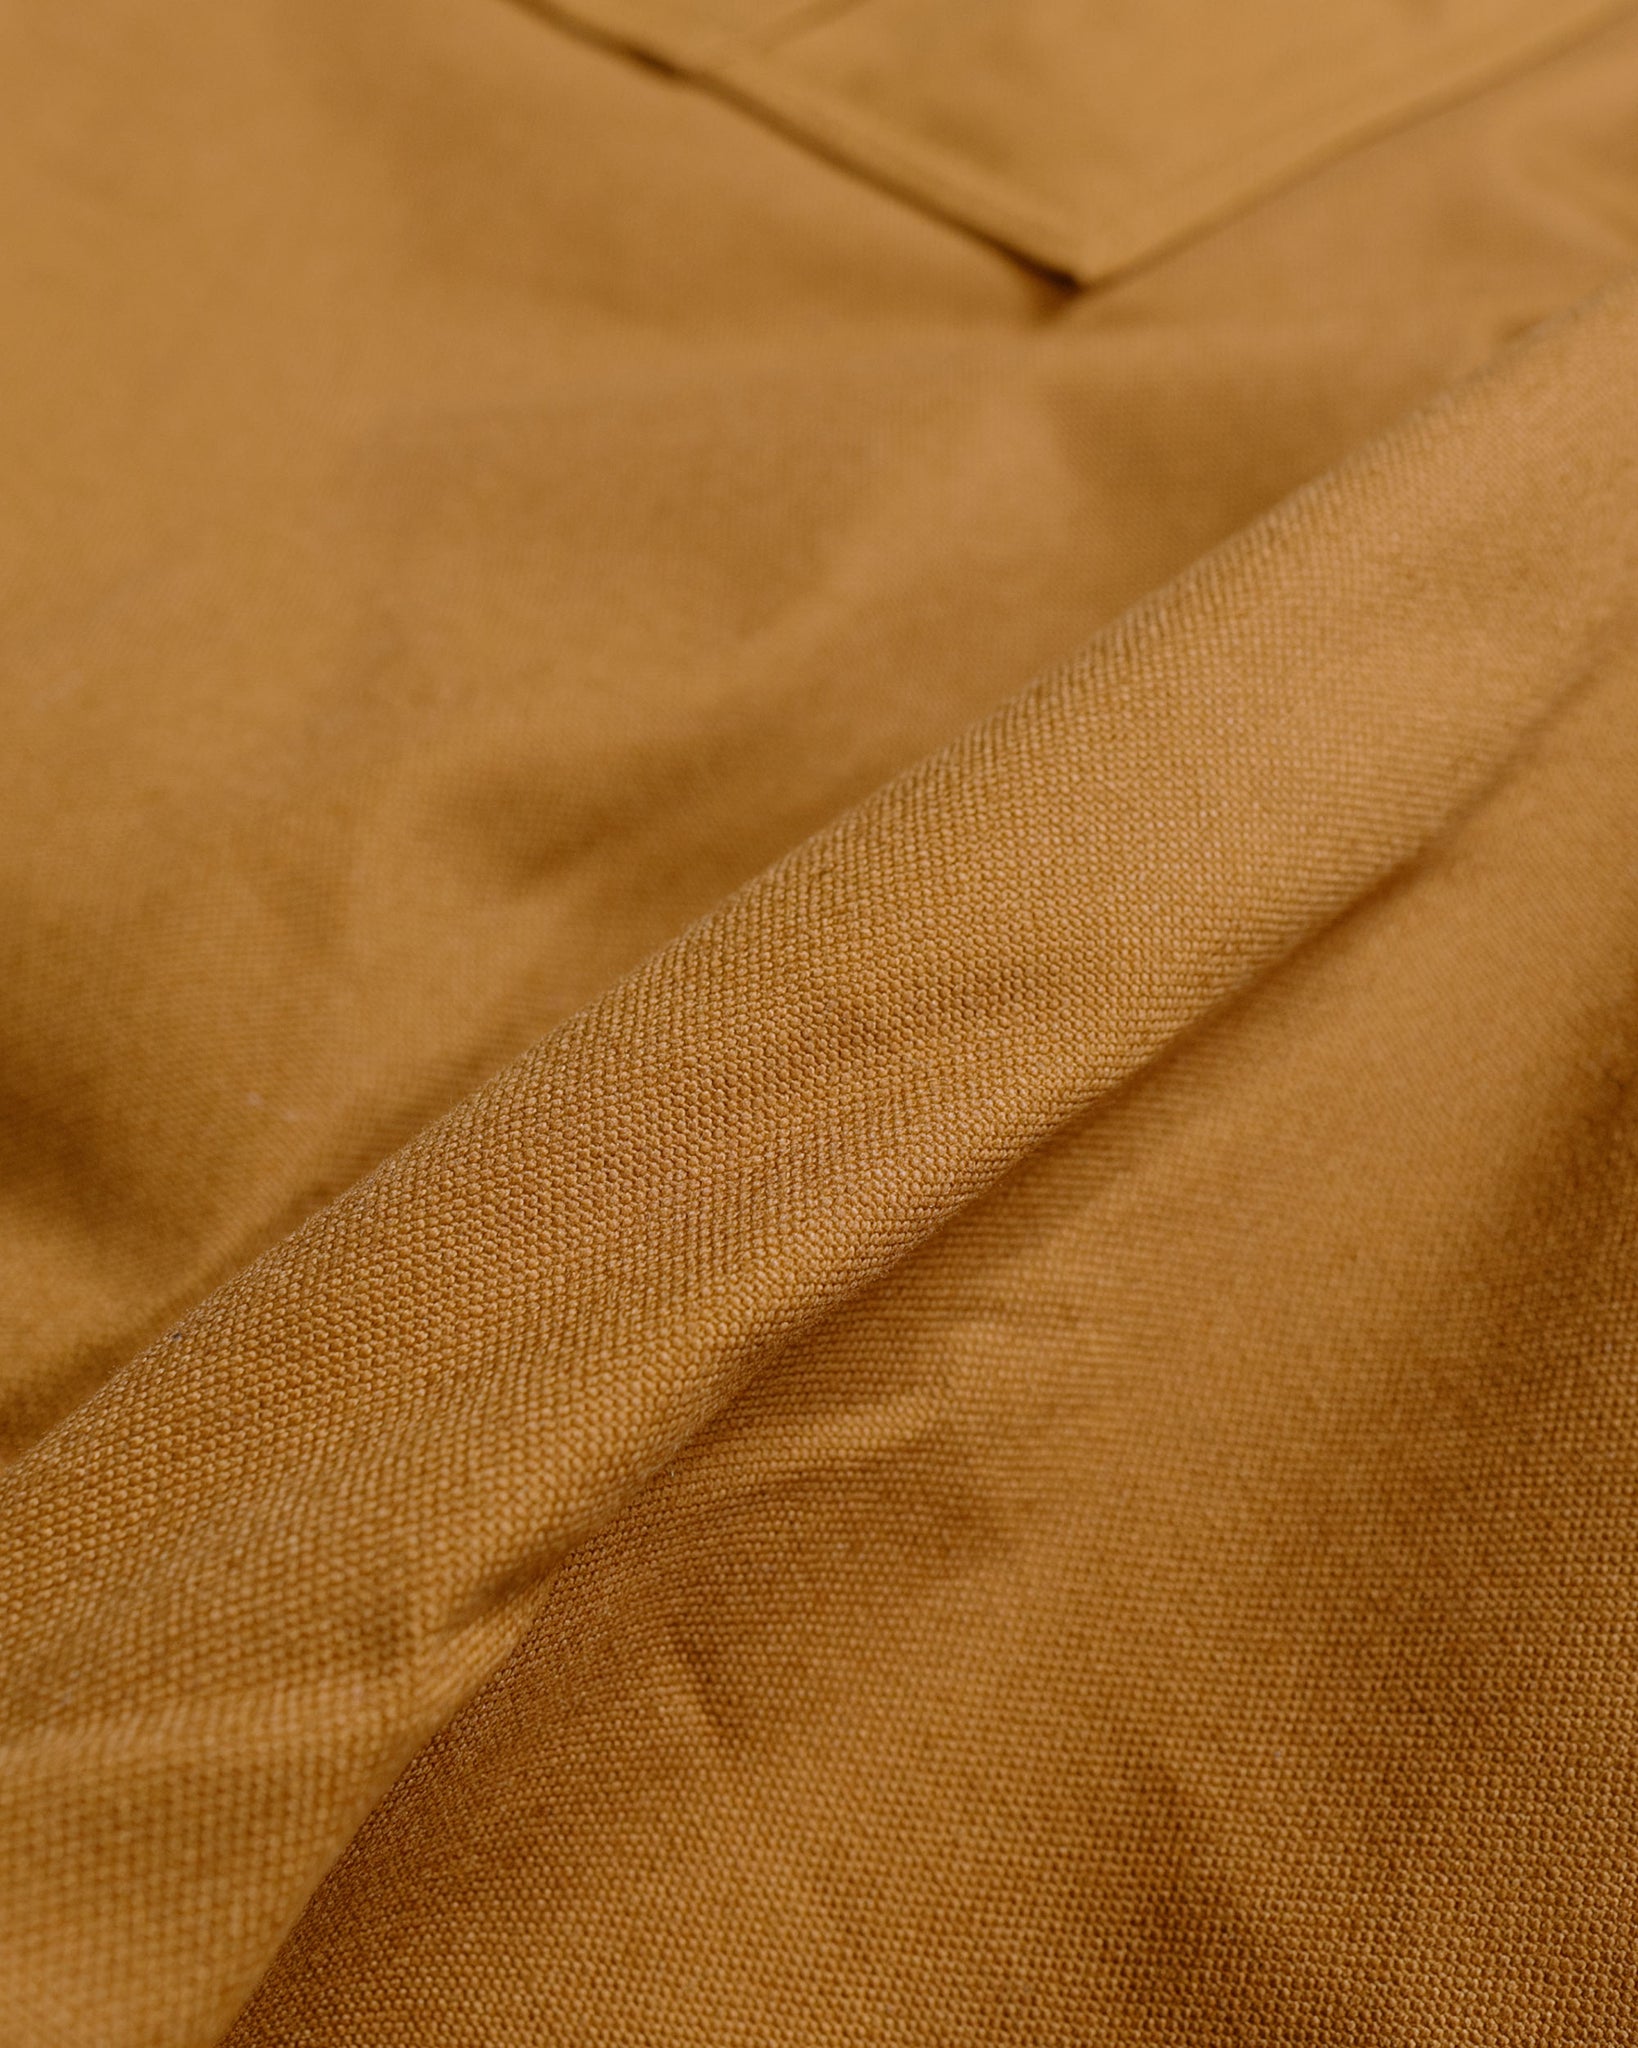 Sassafras Overgrown Fatigue Pants Selvedge Duck Brown fabric